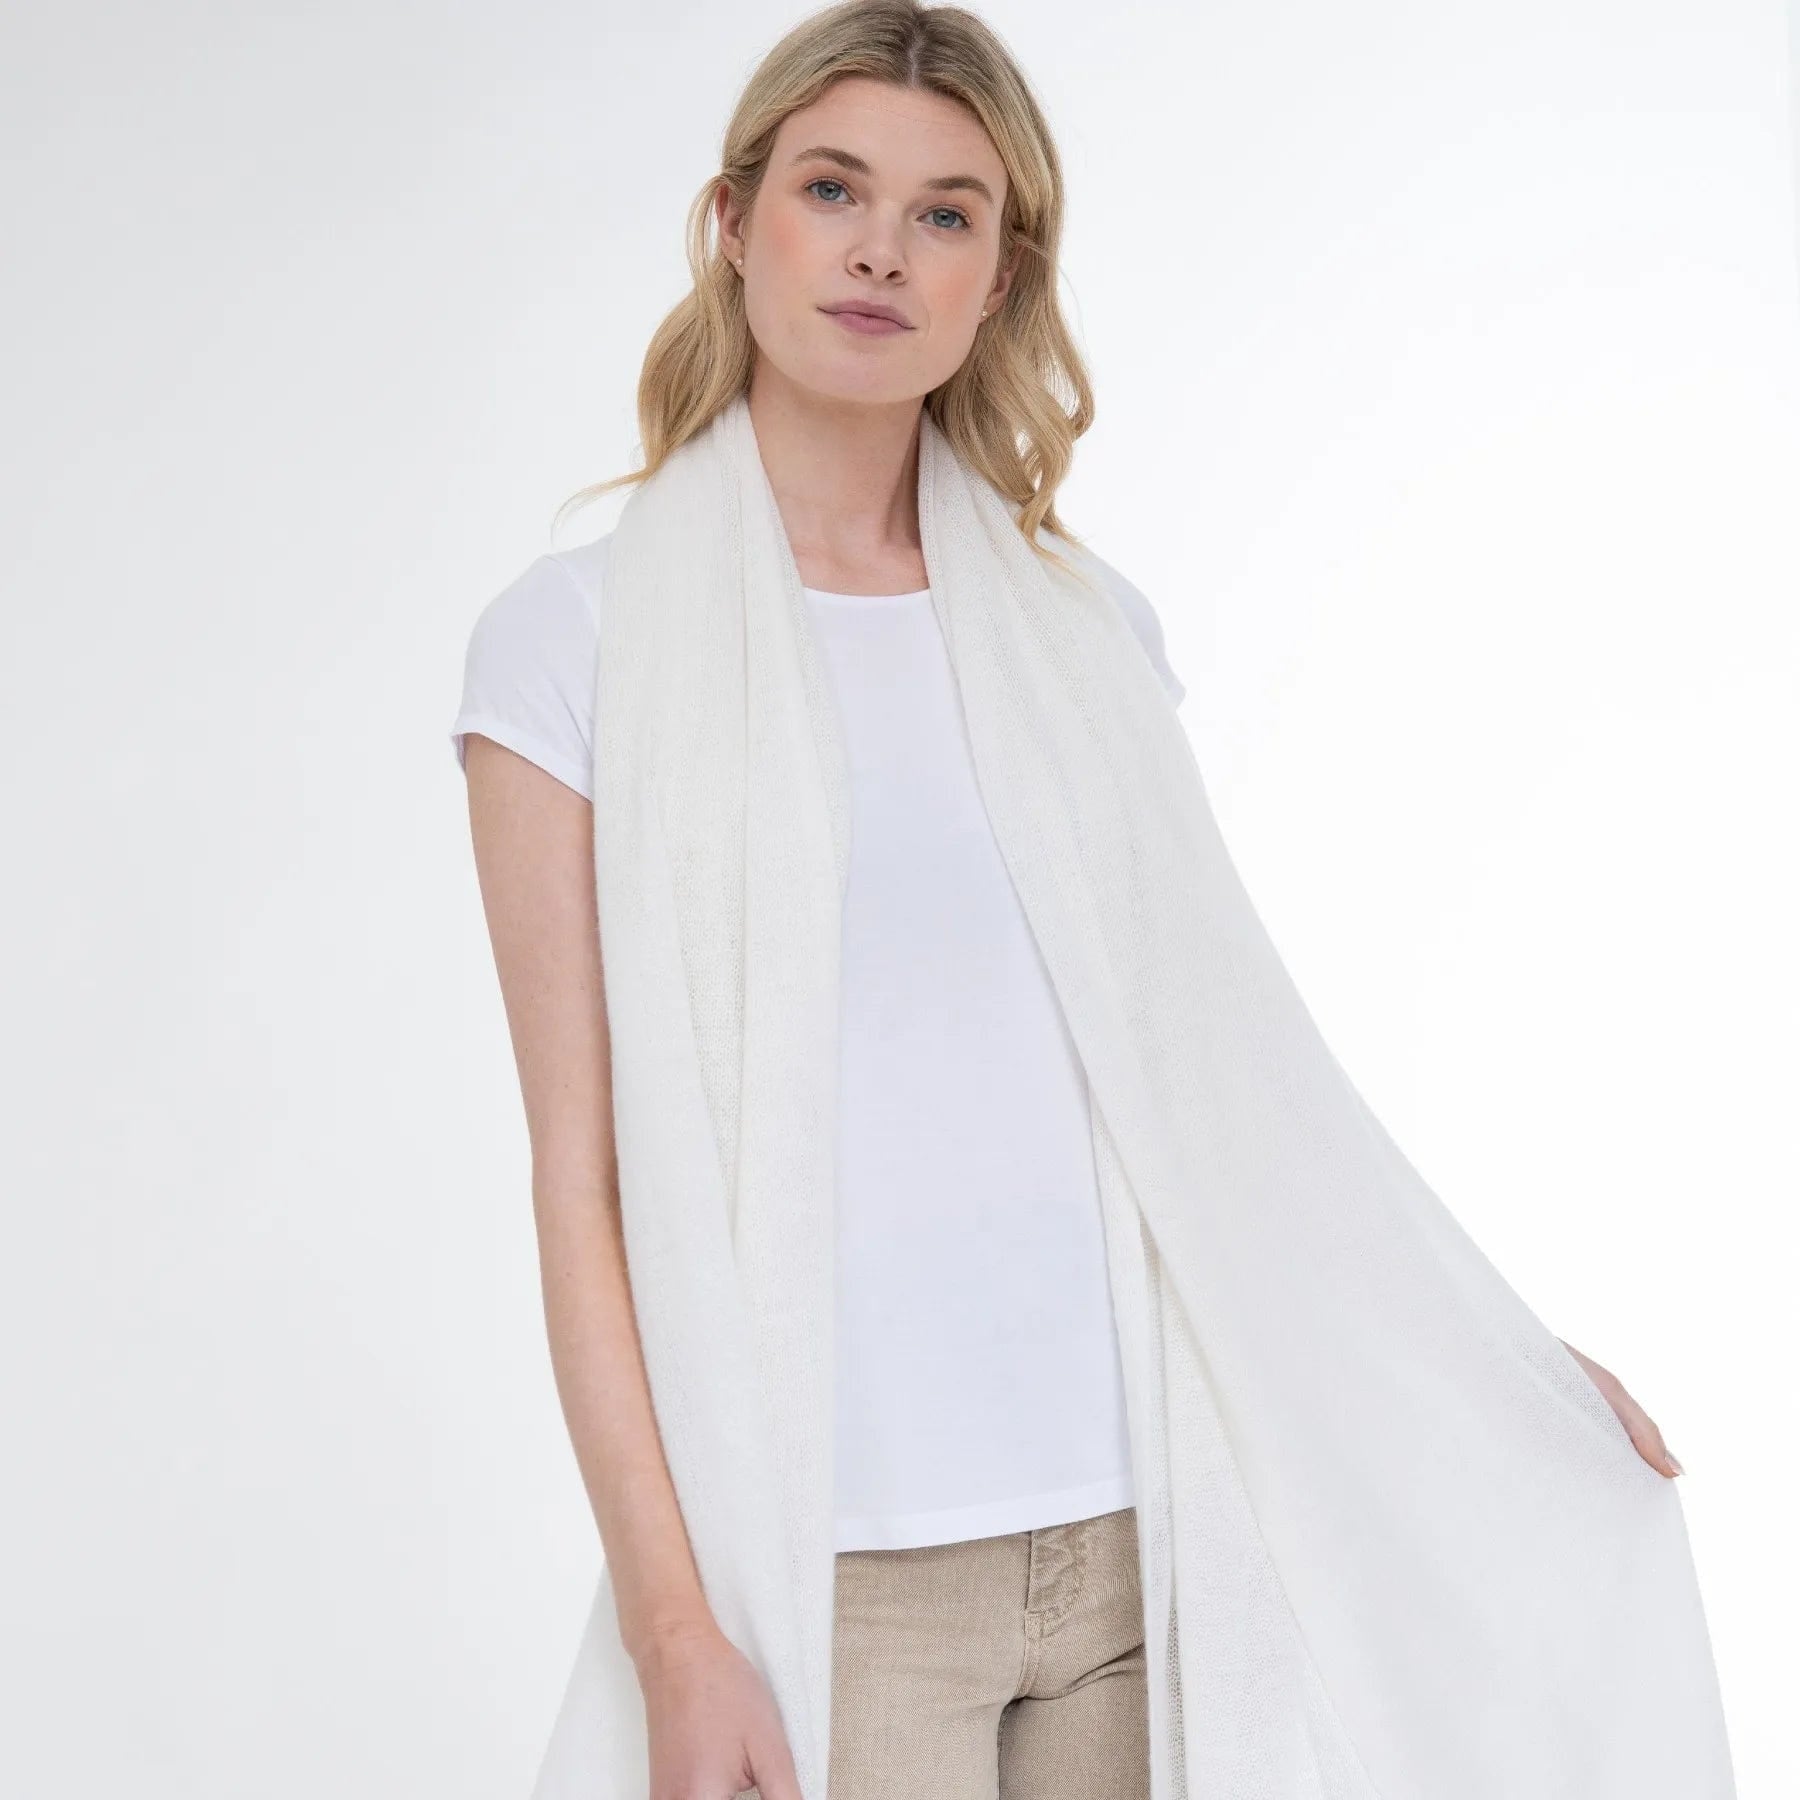 Alashan Cashmere Company Women's Accessories White Cotton Cashmere Breezy Travel Wrap